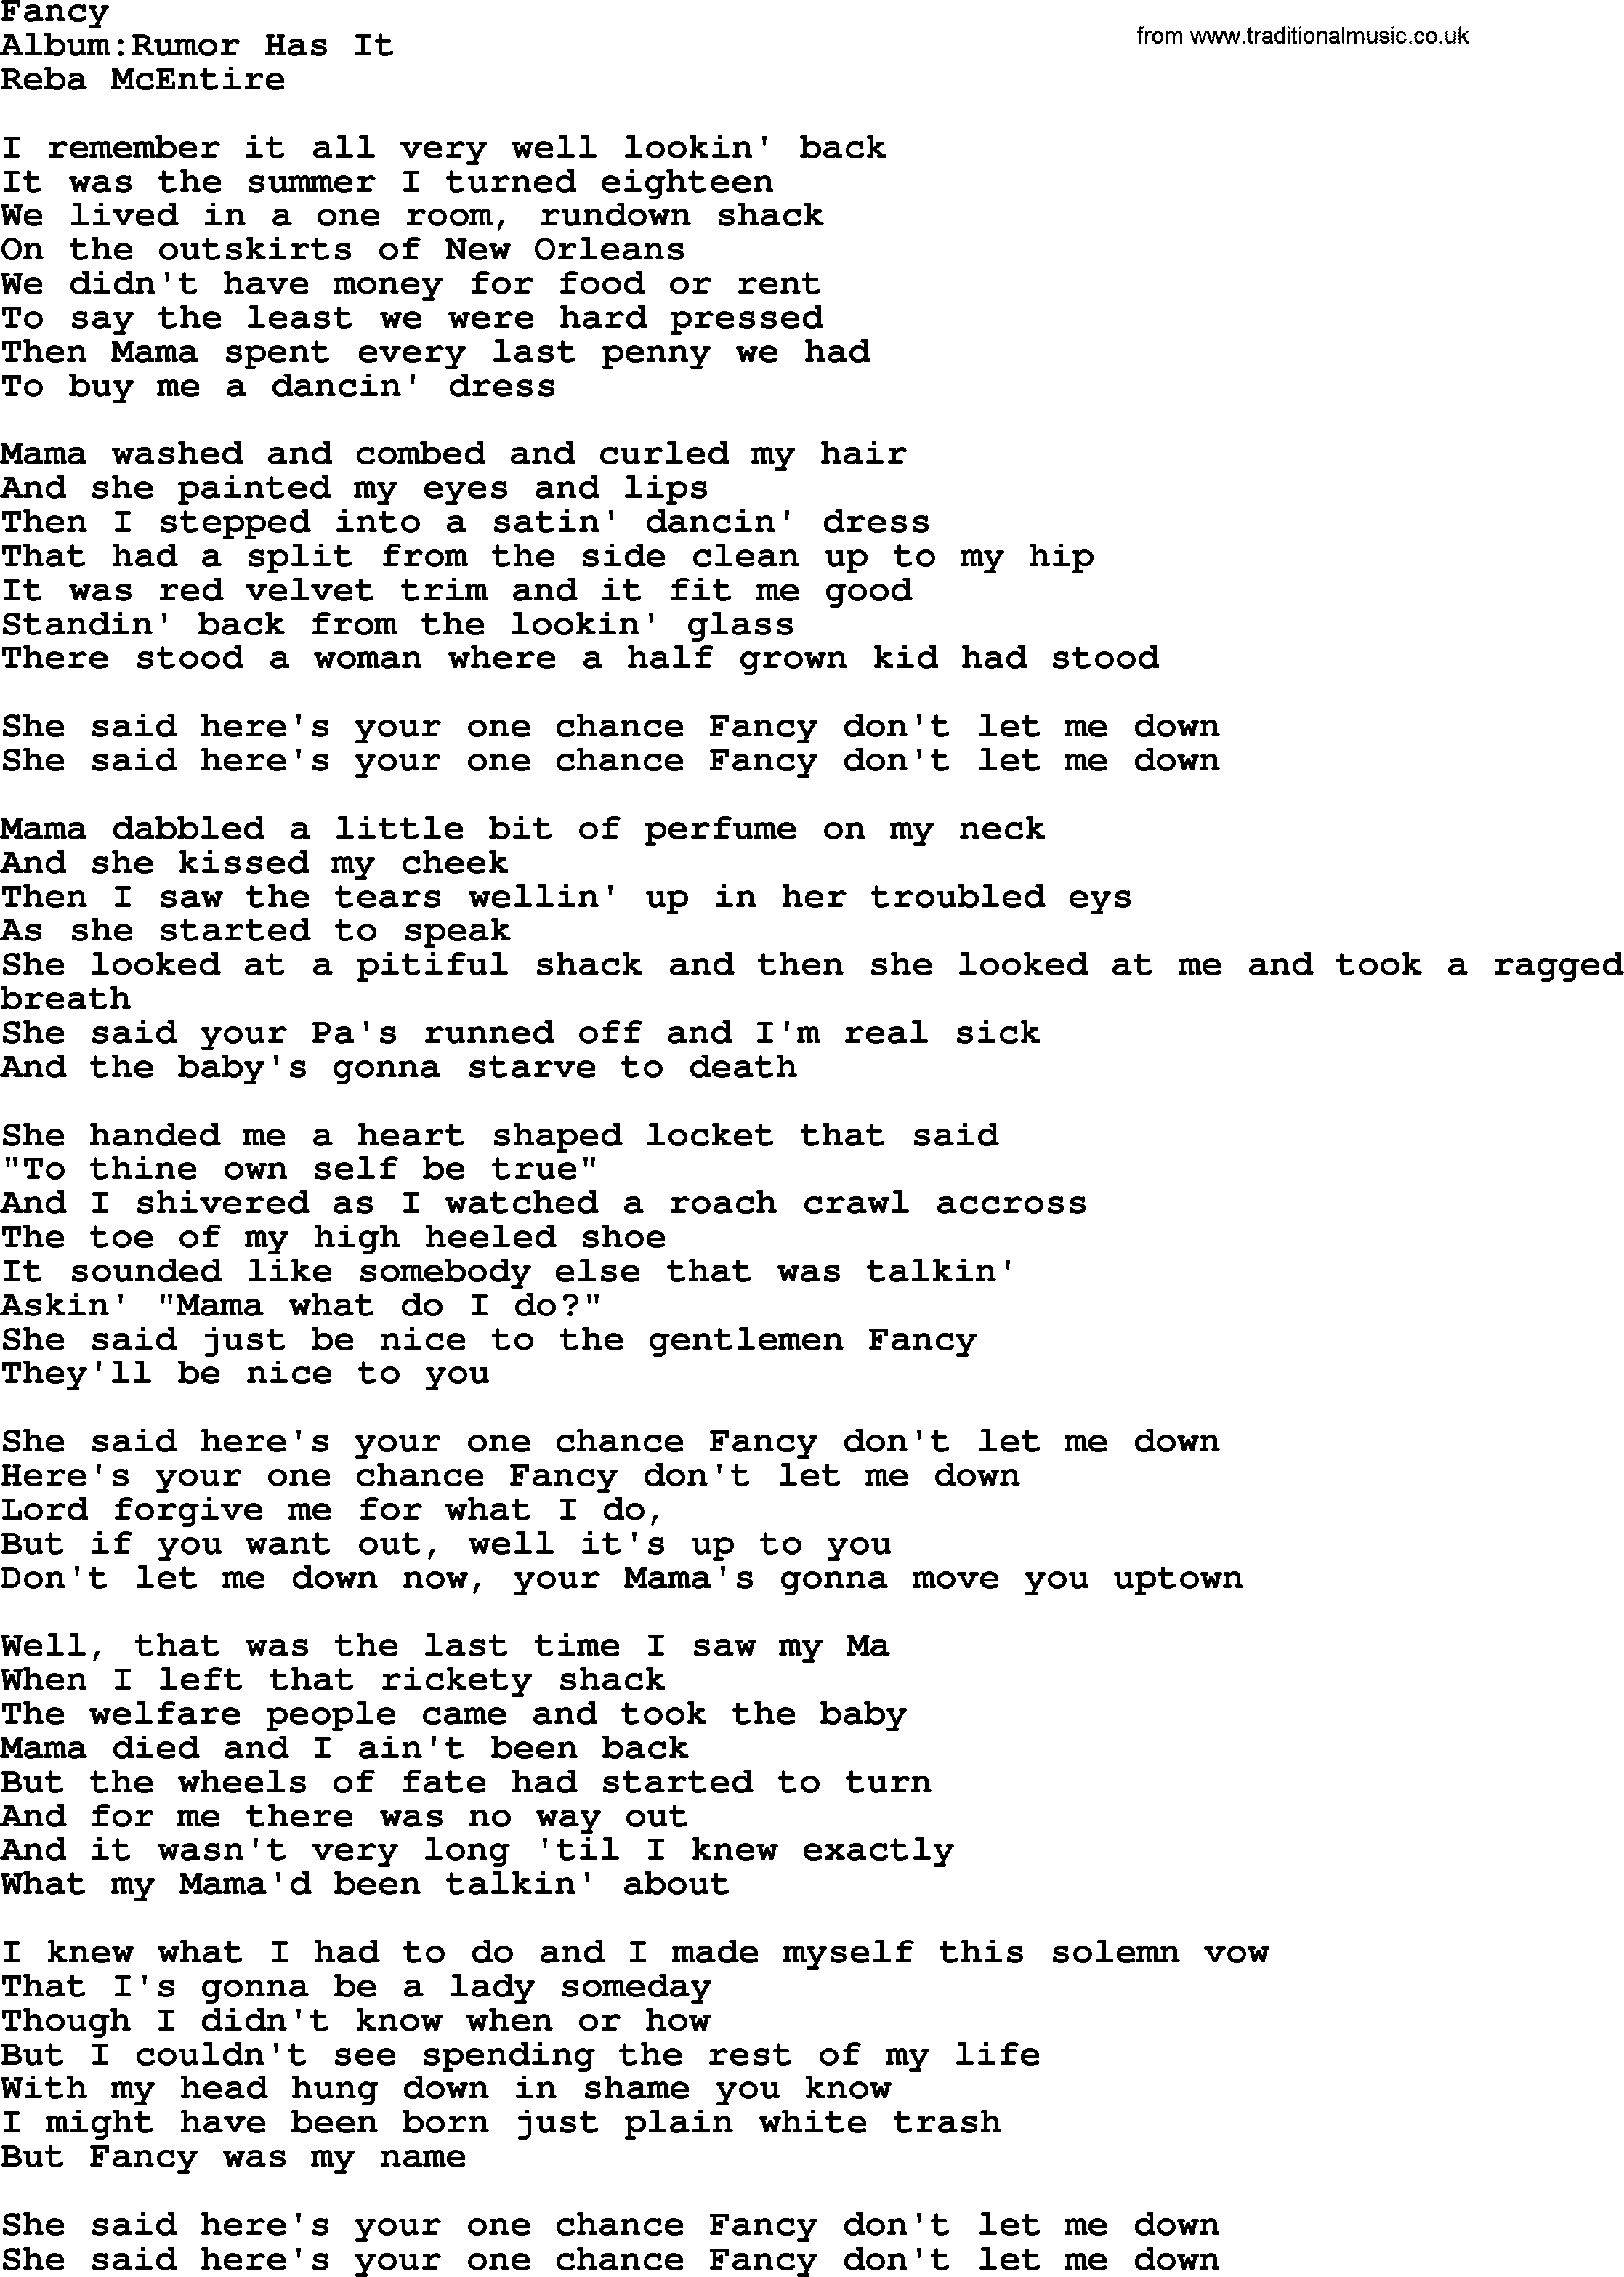 Reba McEntire song: Fancy lyrics